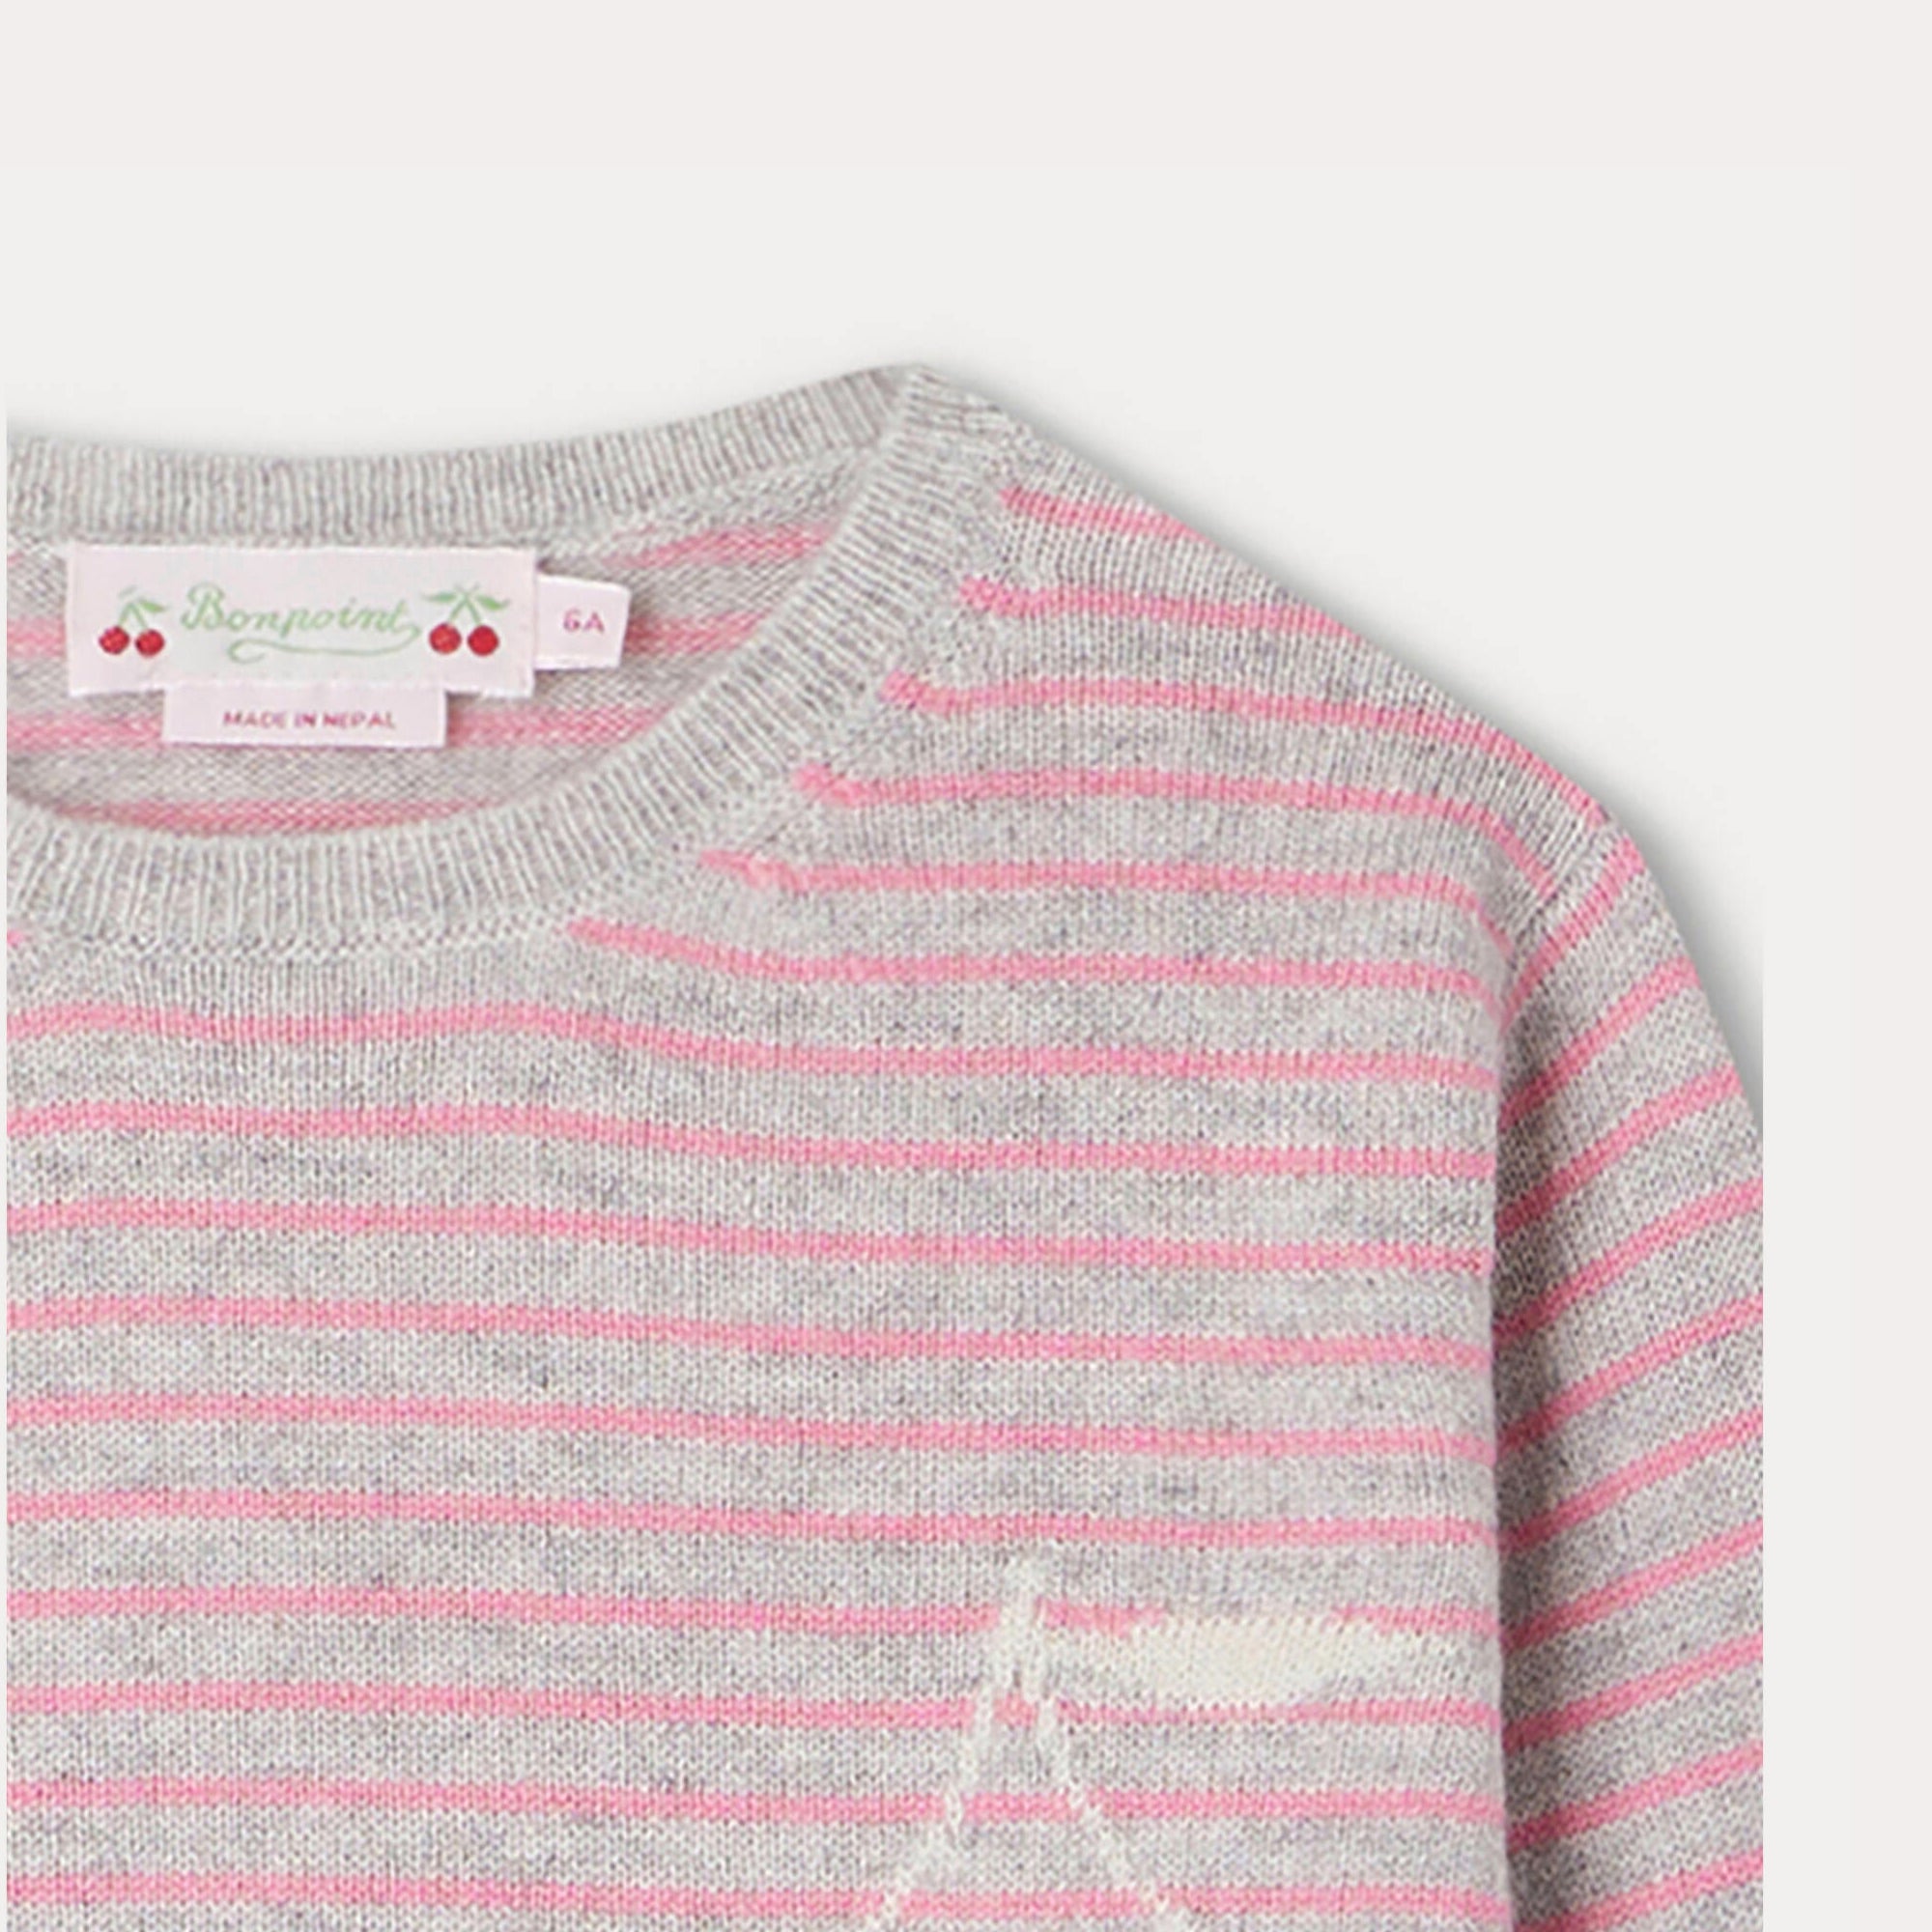 Girls Pink Stripes Cashmere Sweater